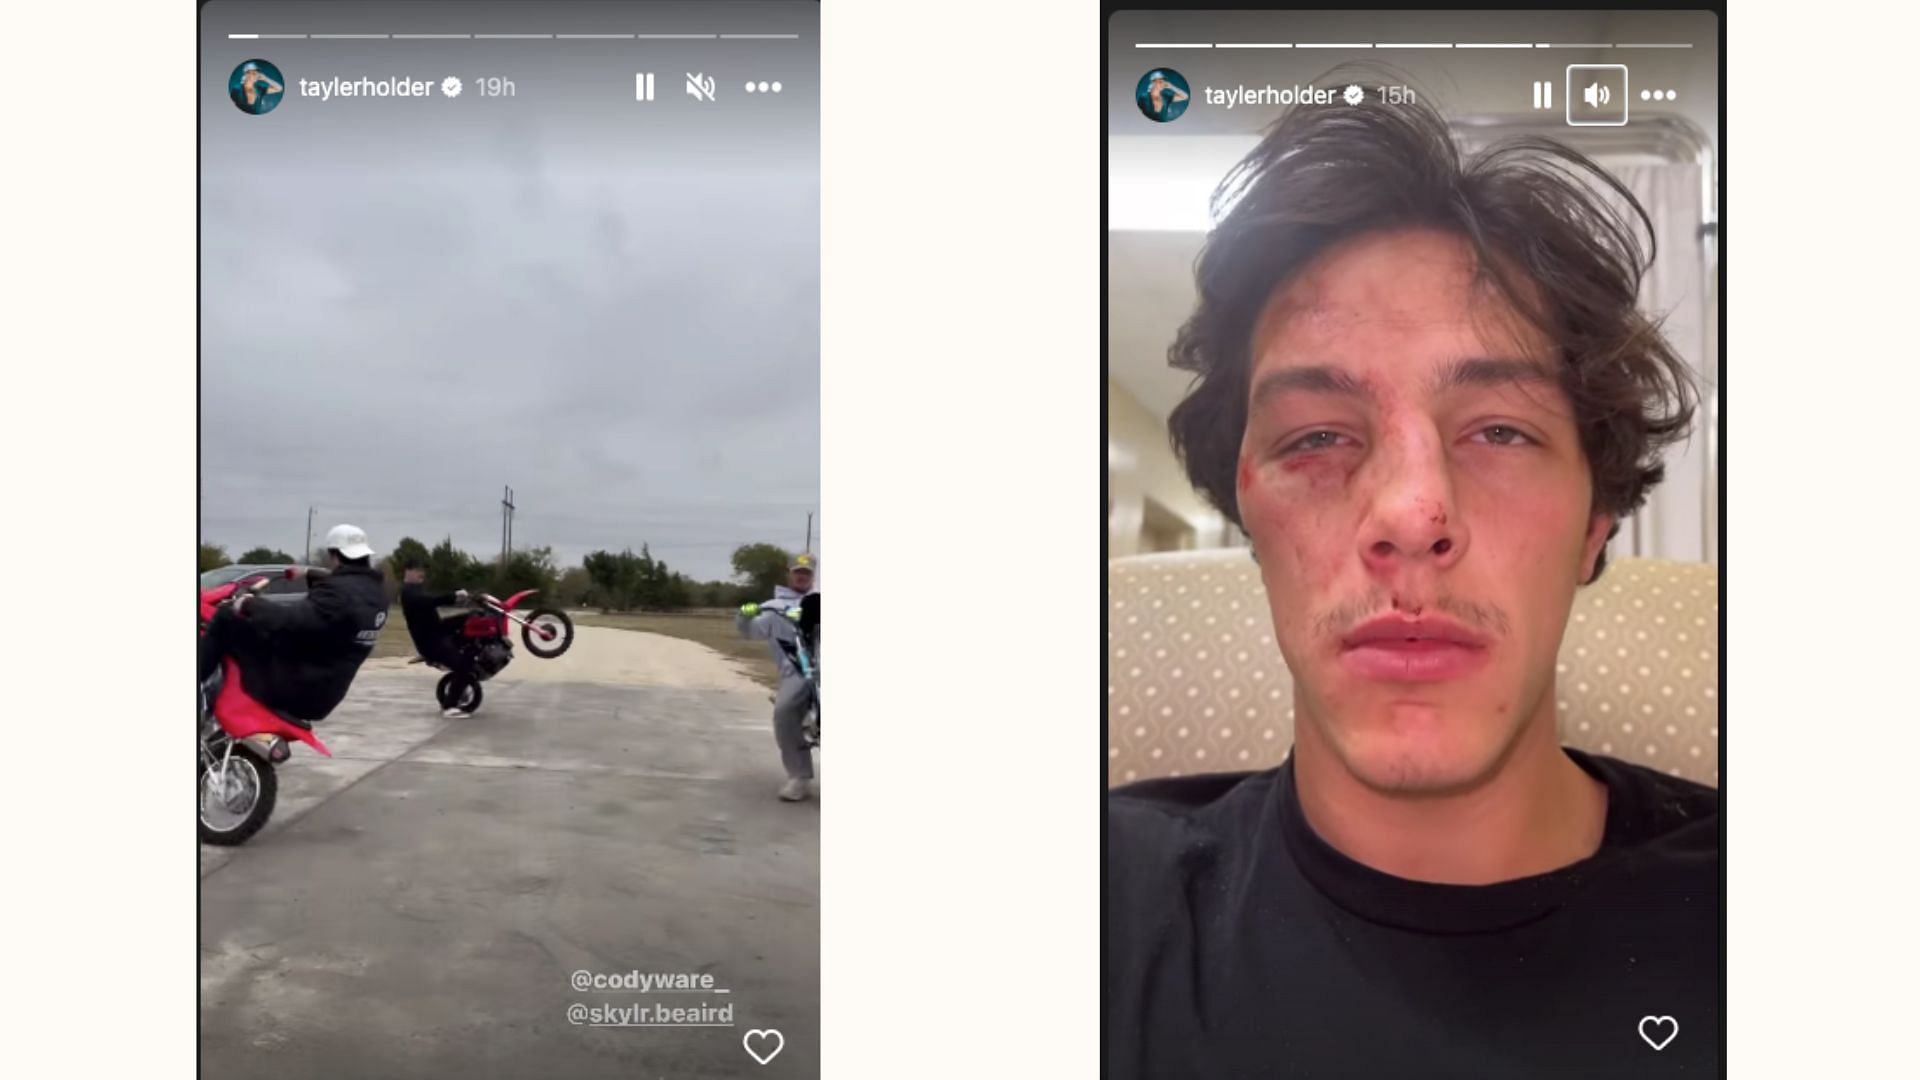 Tayler Holder posted injuries shortly after riding dirt bikes (image via Instagram)